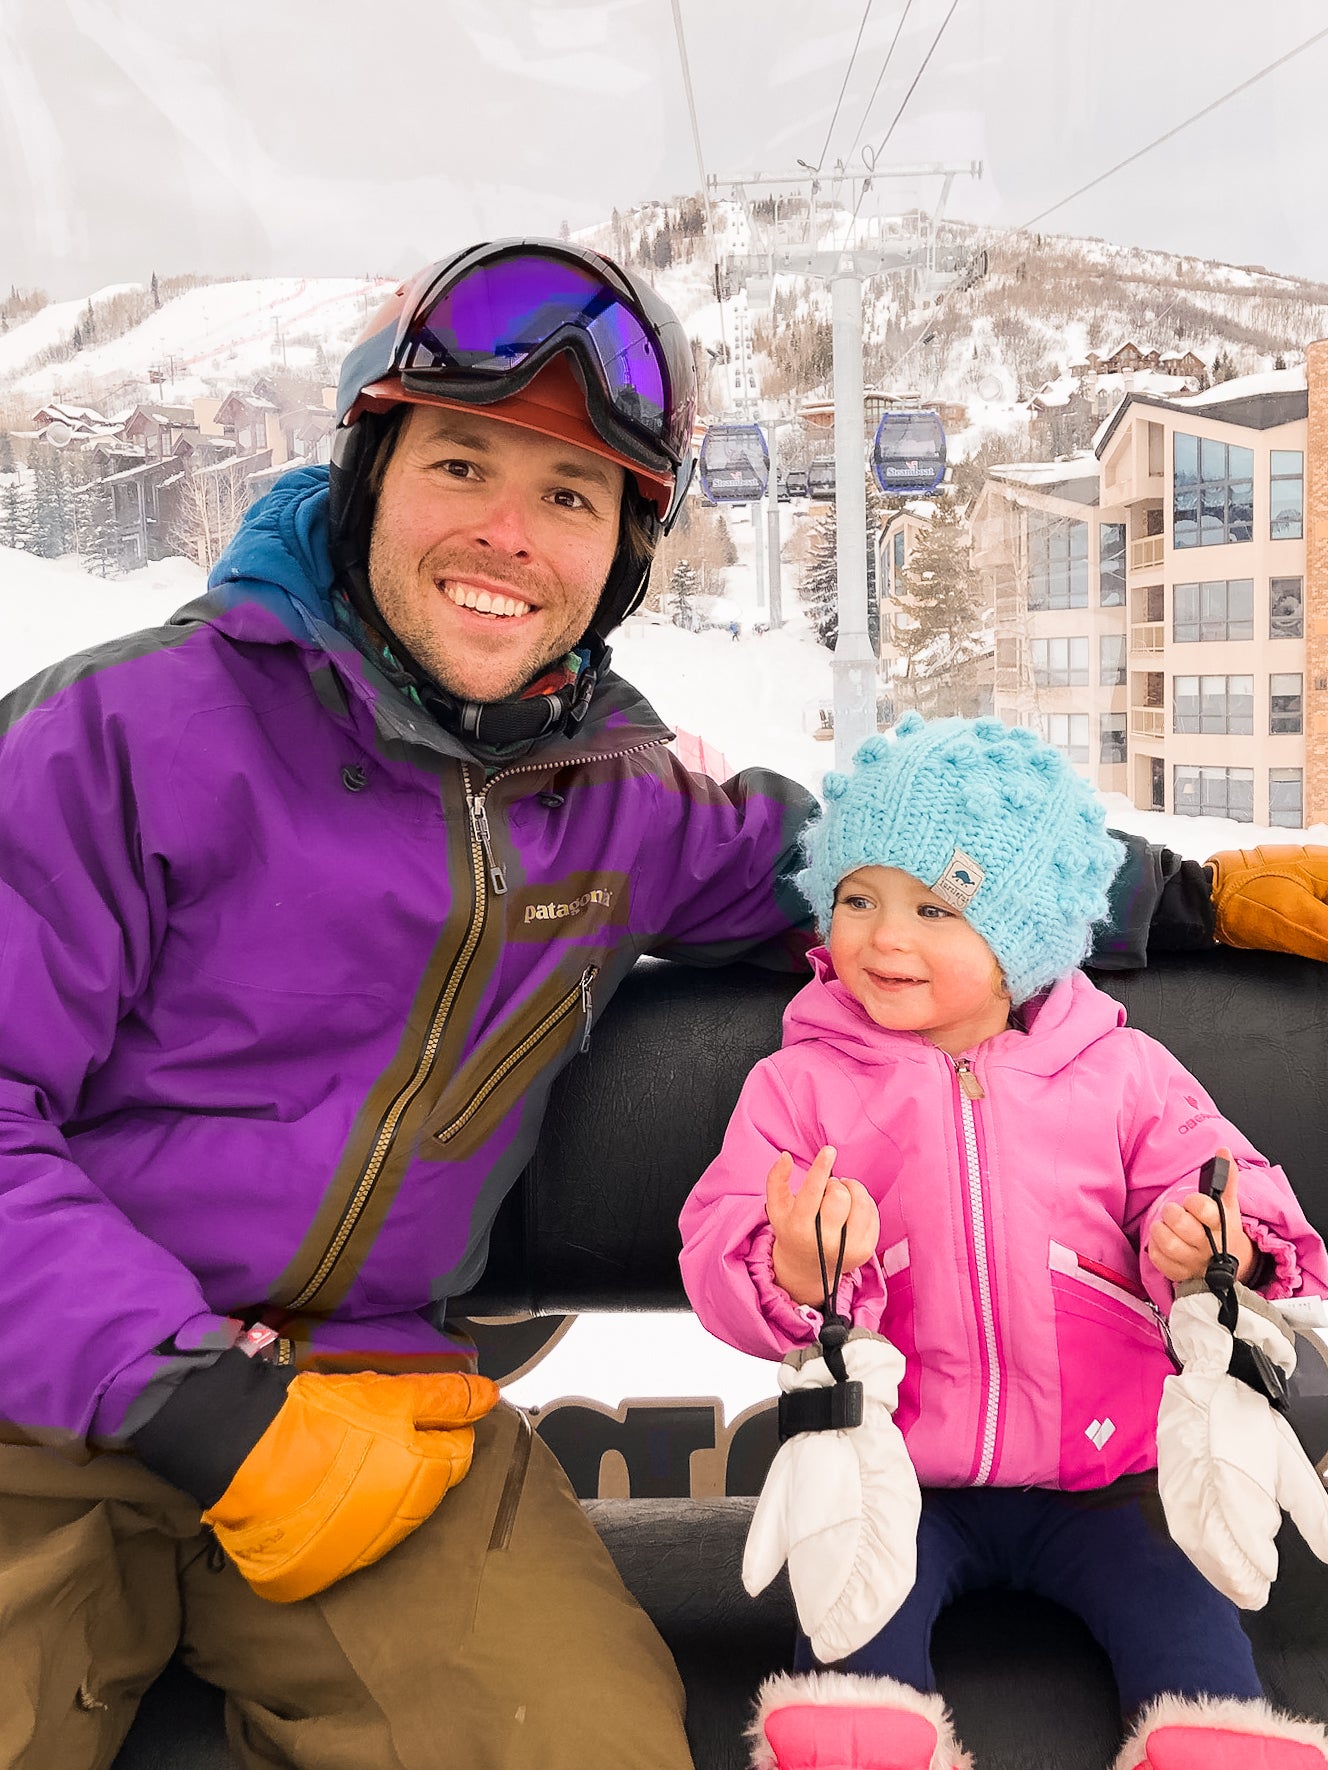 Brad and daughter on ski lift